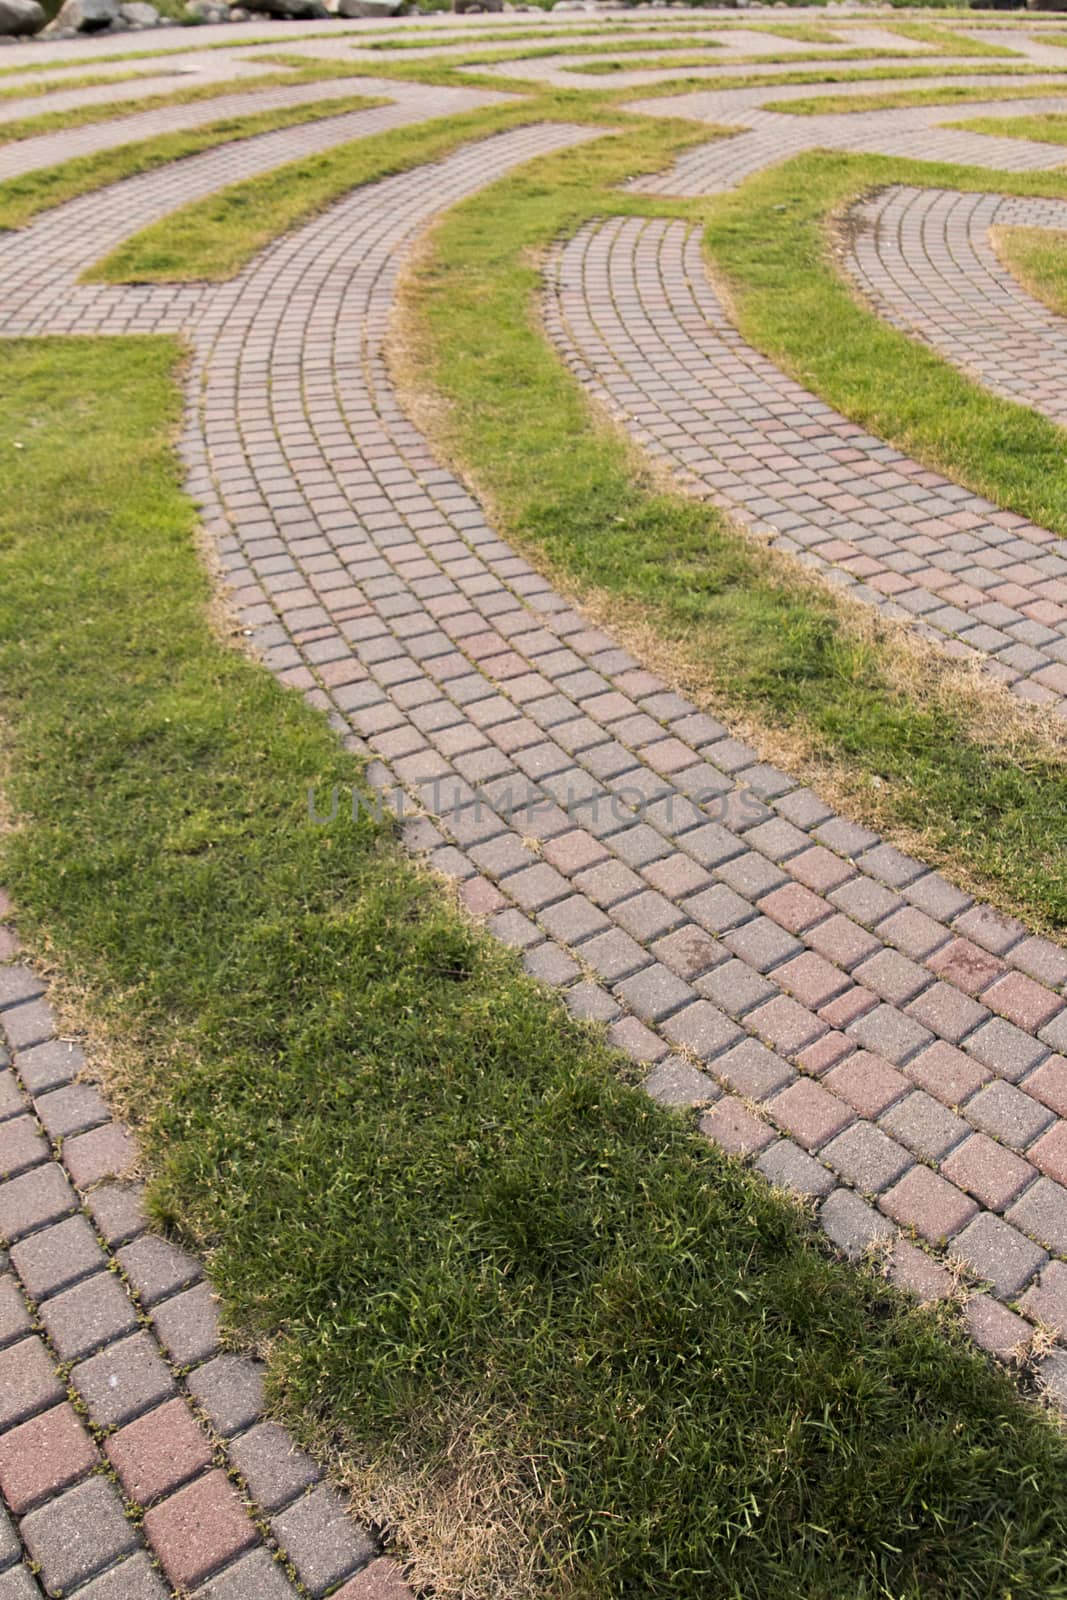 A brick walkway in a public park in Edina, Minnesota.